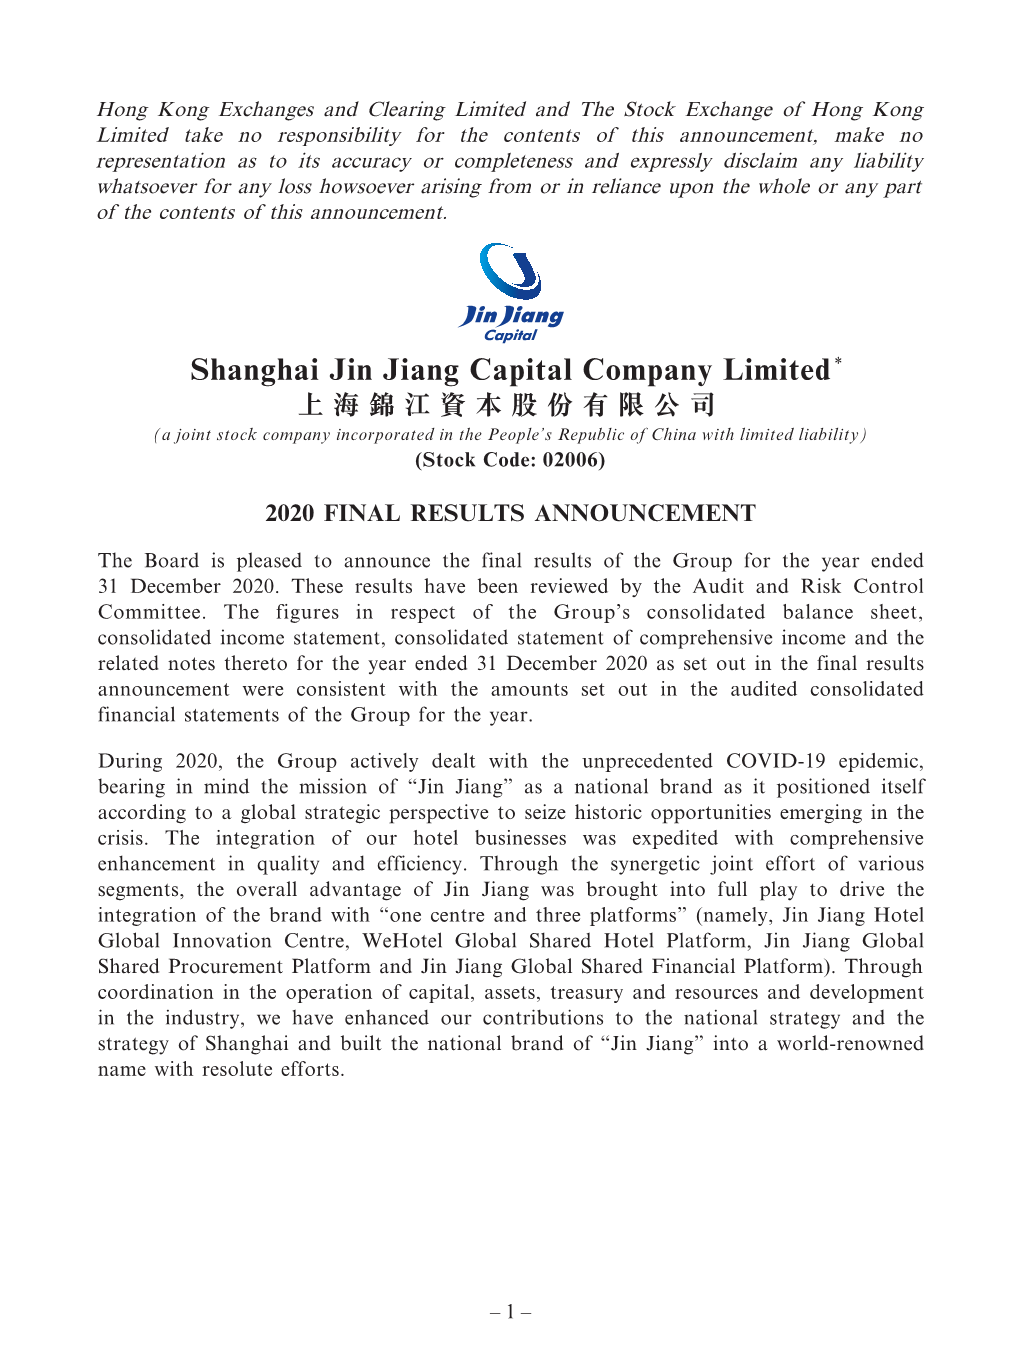 Shanghai Jin Jiang Capital Company Limited